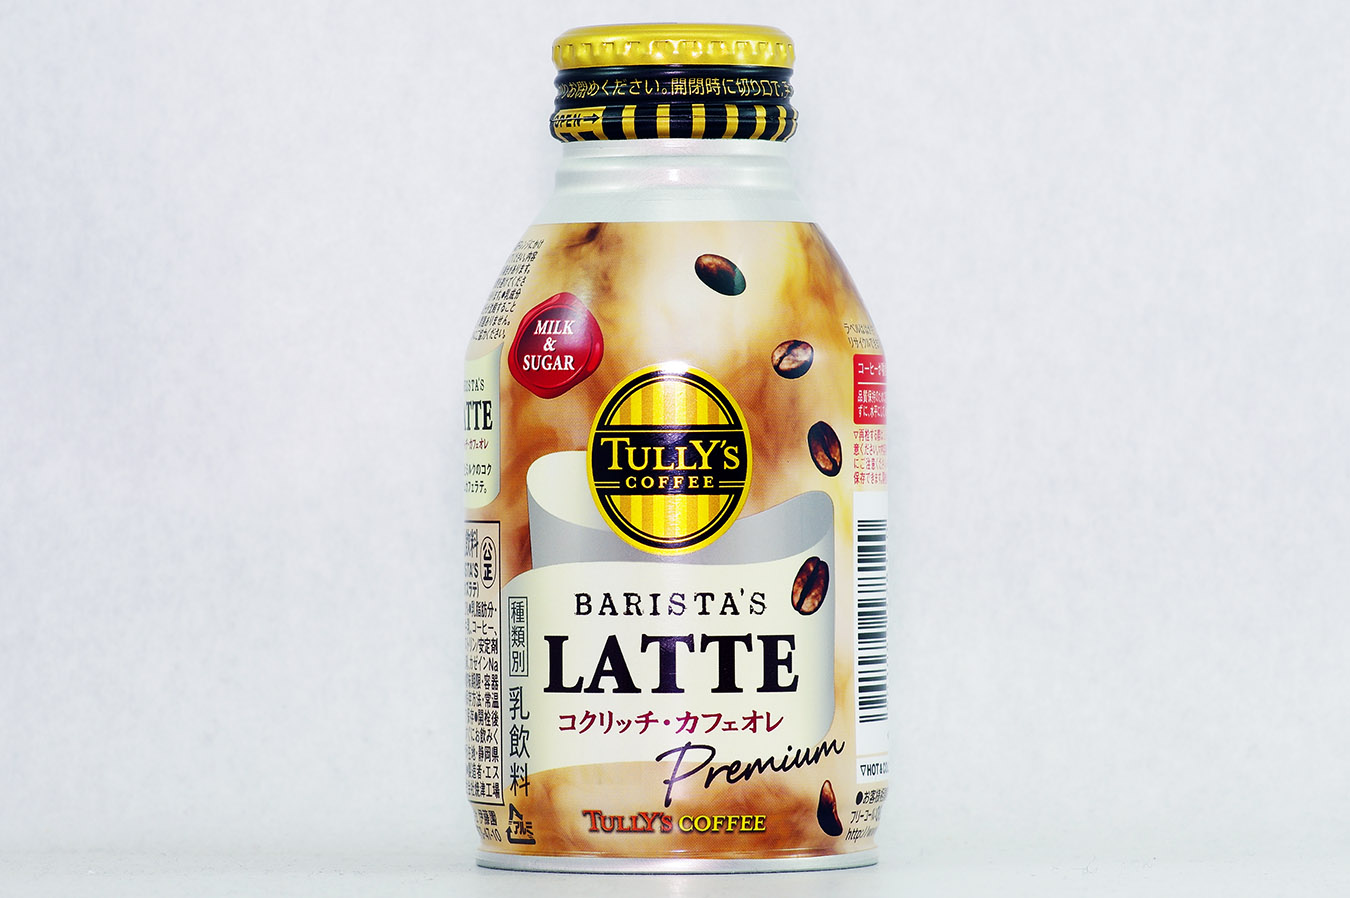 TULLY'S COFFEE BARISTA'S LATTE コクリッチ・カフェオレ 2016年4月